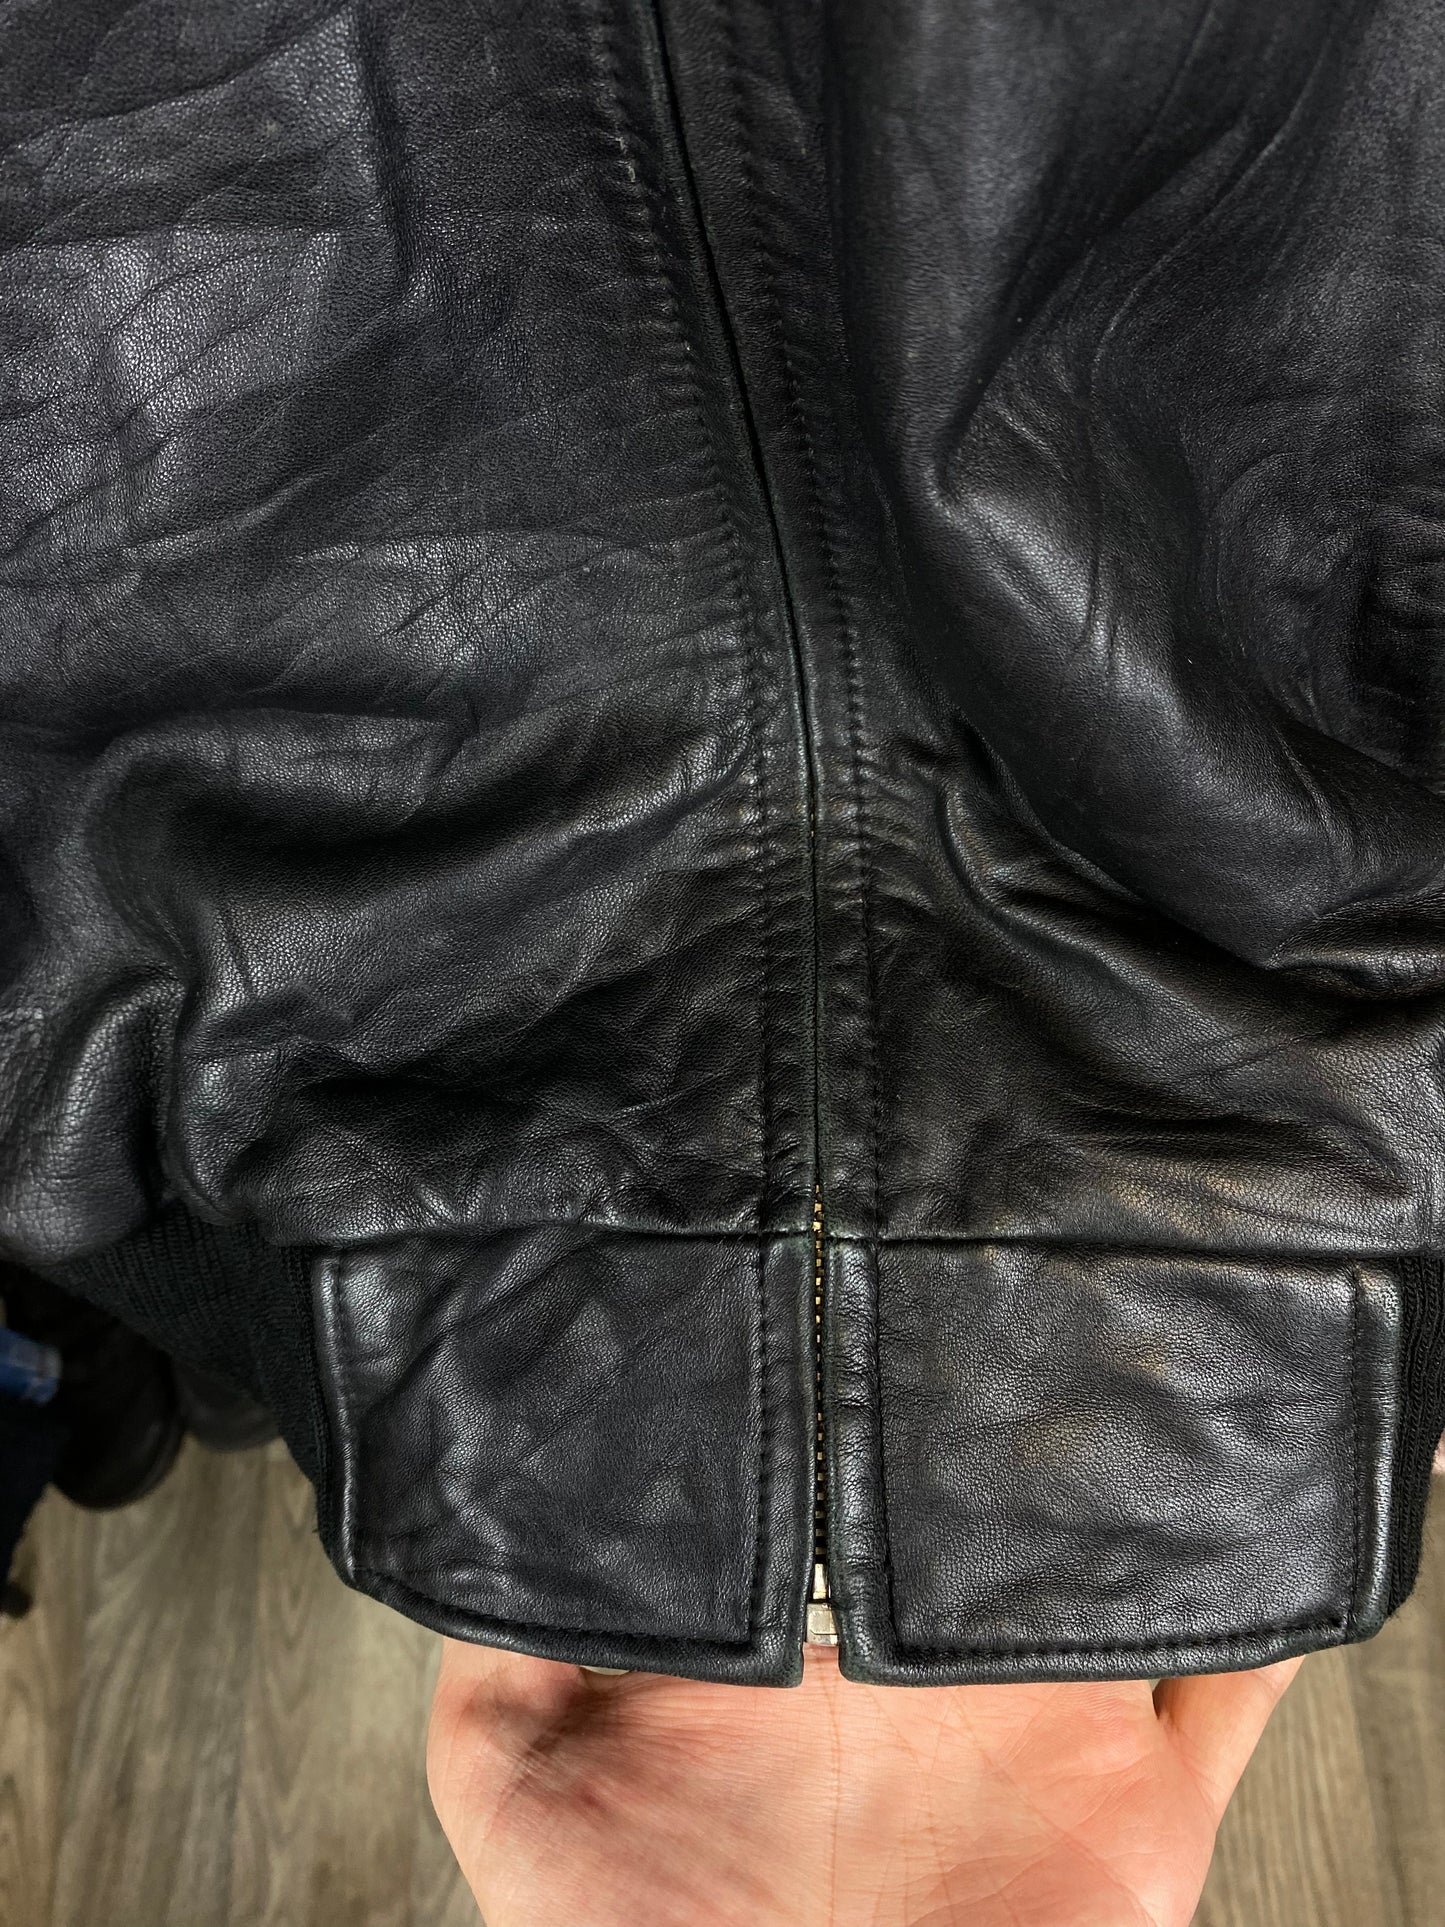 Vintage Leather Jacket Bomber - size S